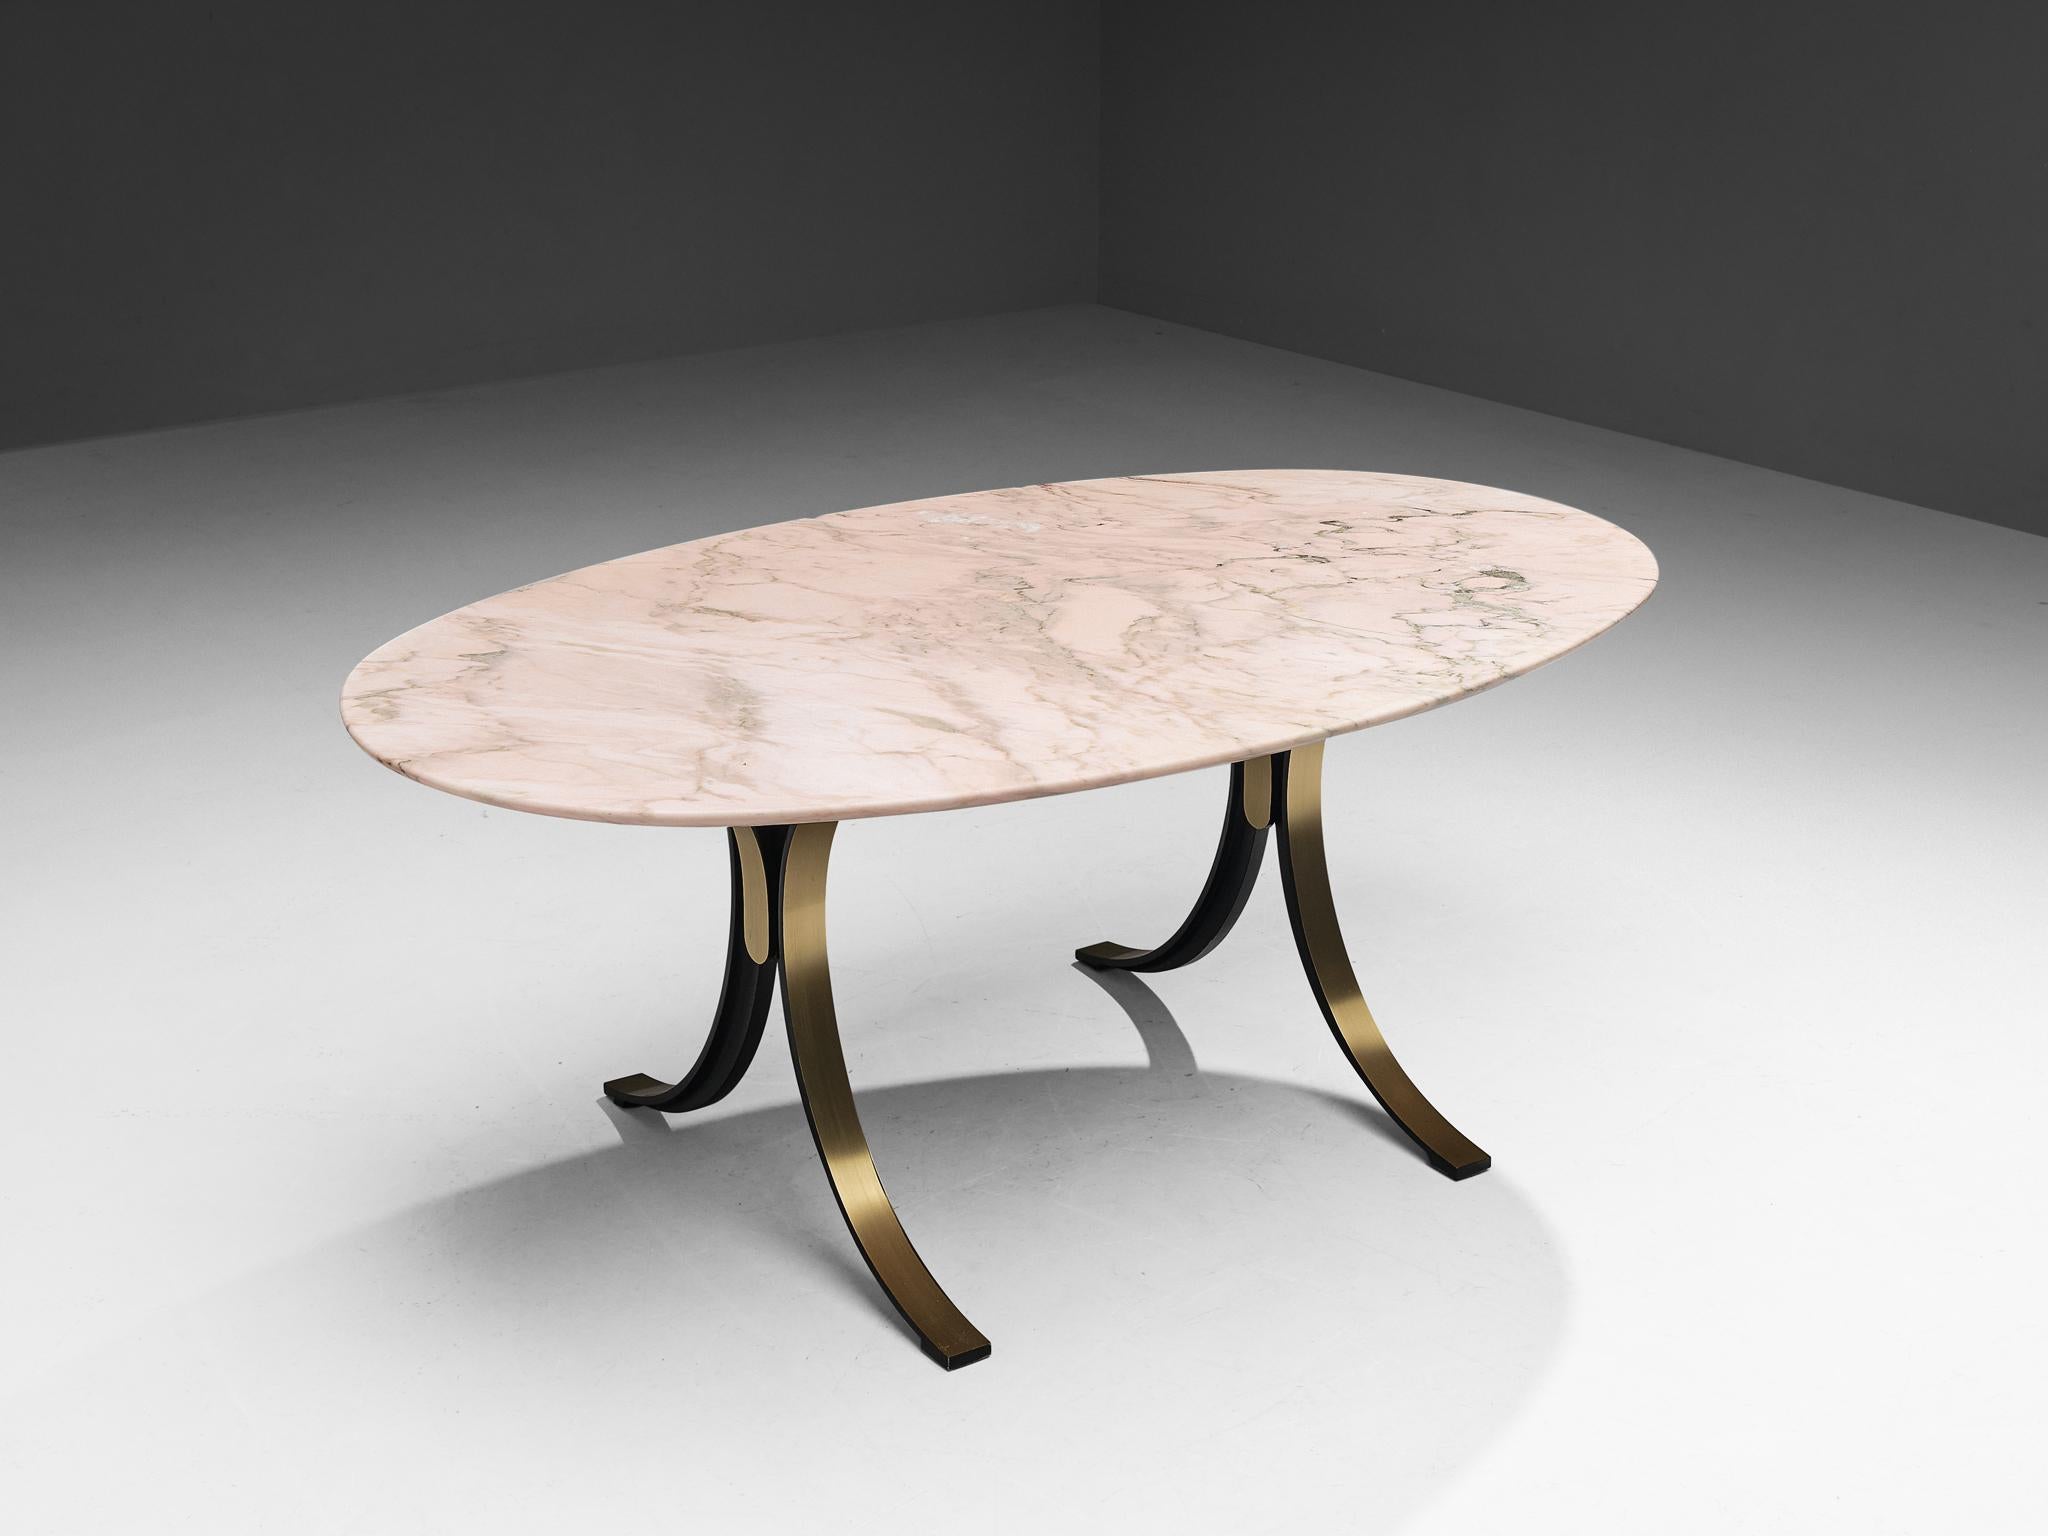 Steel Osvaldo Borsani & Eugenio Gerli for Tecno Oval Dining Table in Marble  For Sale